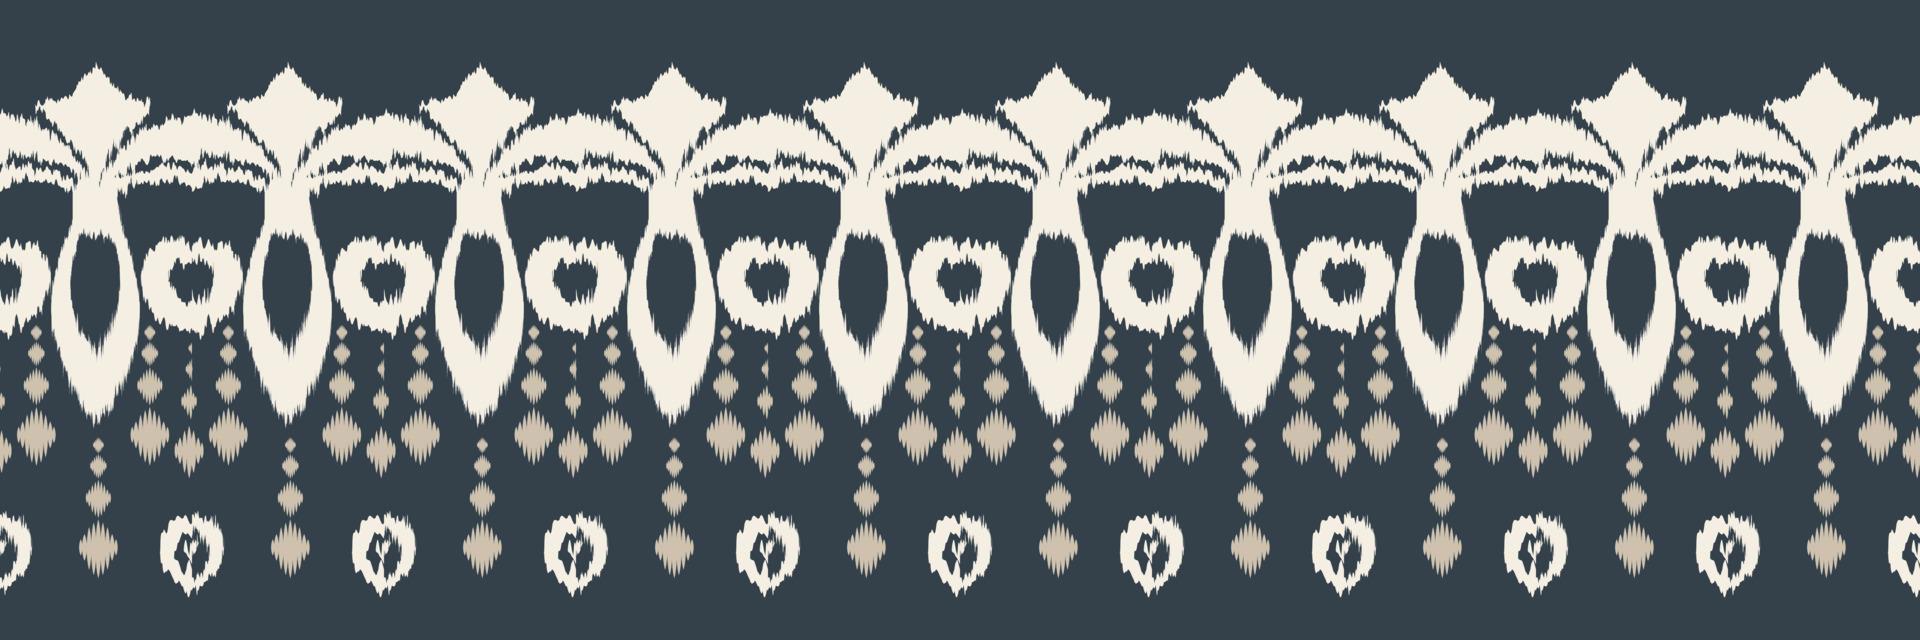 ikat borde tribal cruz de patrones sin fisuras. étnico geométrico ikkat batik vector digital diseño textil para estampados tela sari mughal cepillo símbolo franjas textura kurti kurtis kurtas